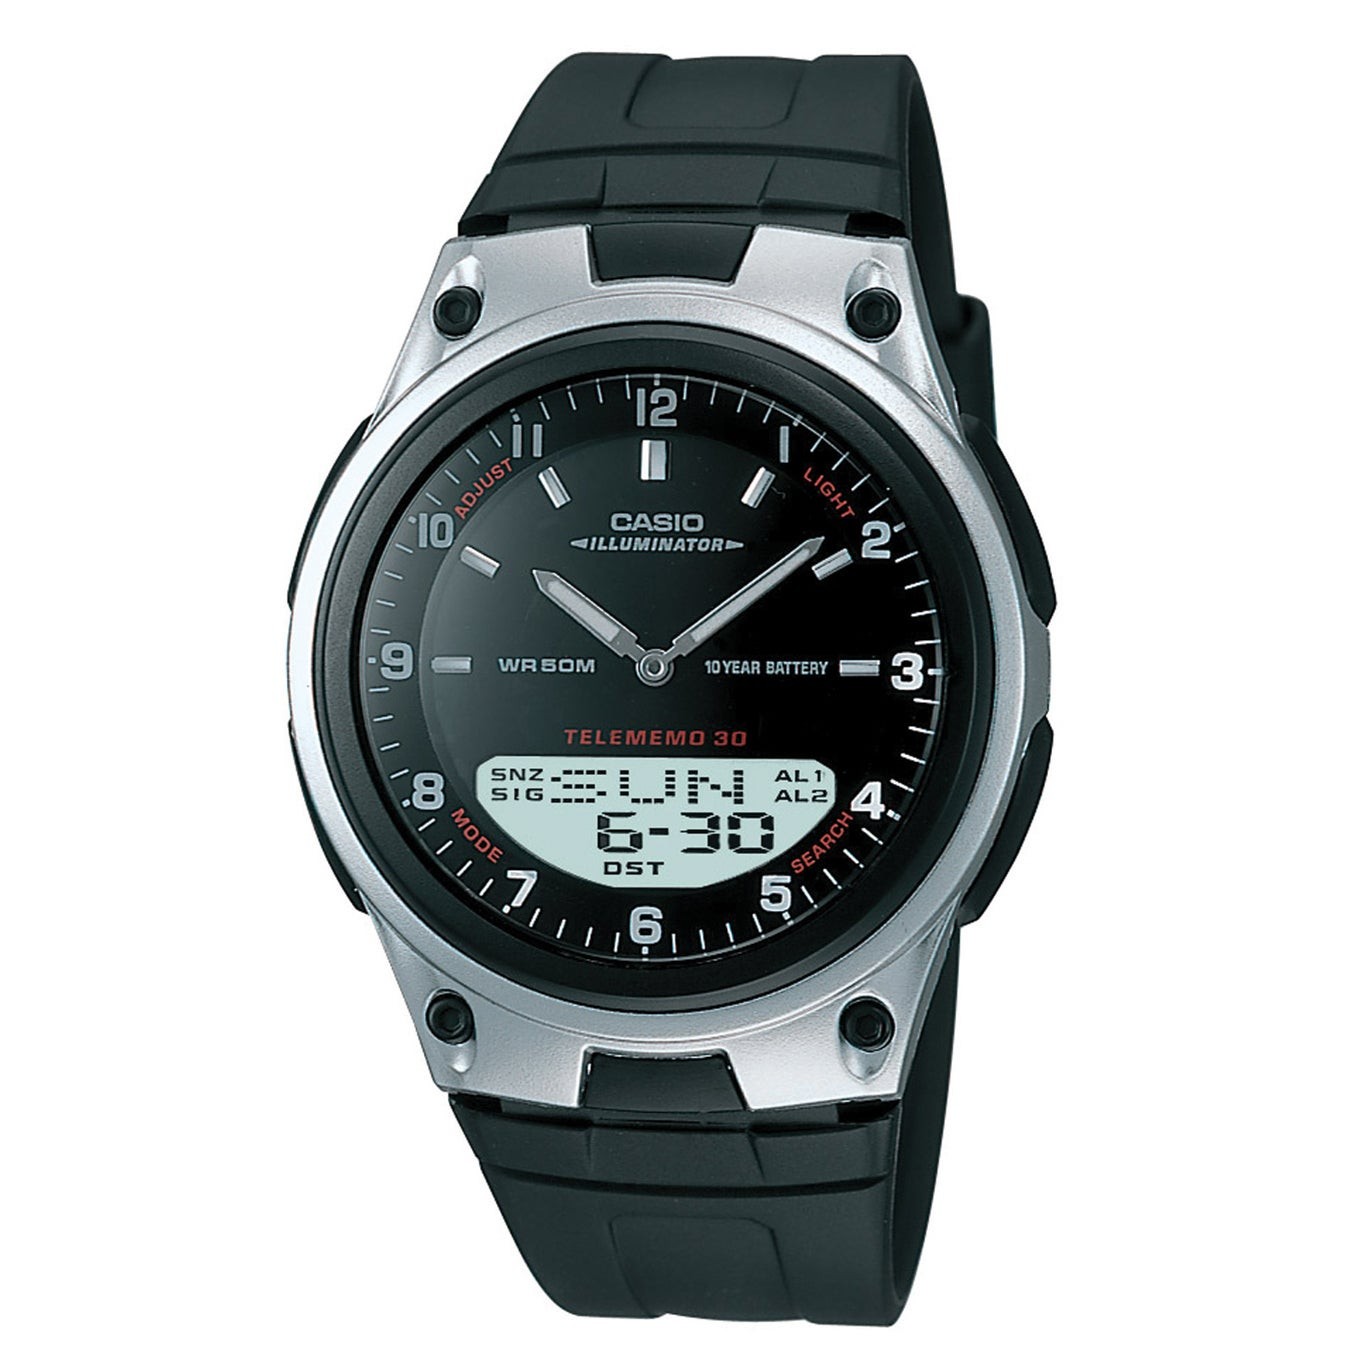 Unisex Sports Analog/Digital Watch Black Dial